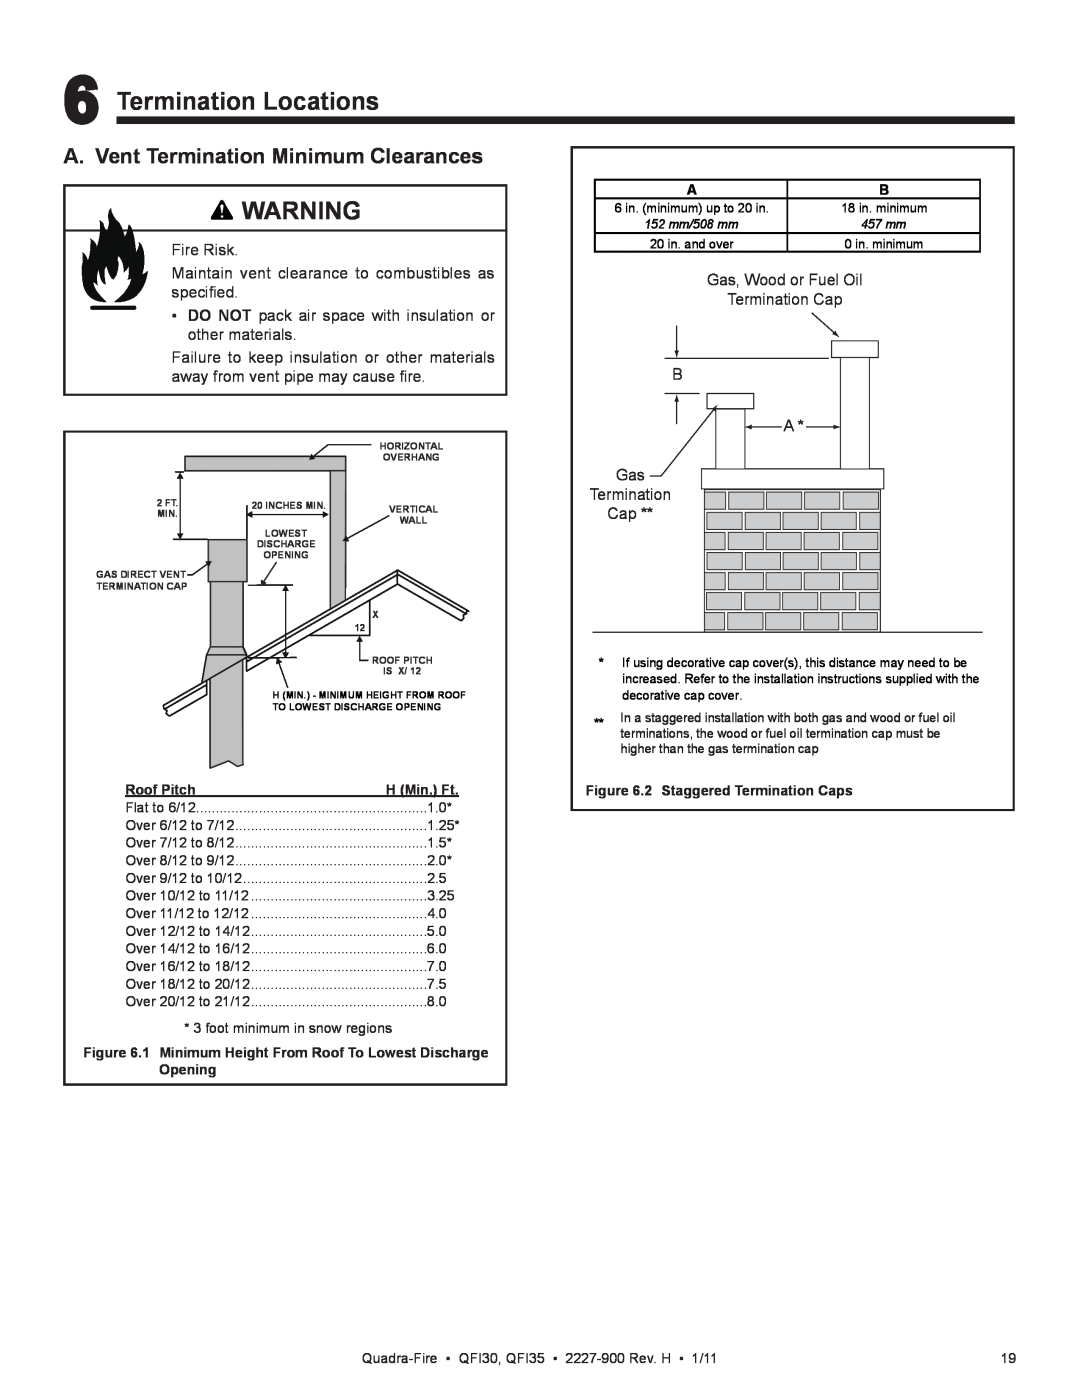 Quadra-Fire QF130 owner manual Termination Locations, A. Vent Termination Minimum Clearances 